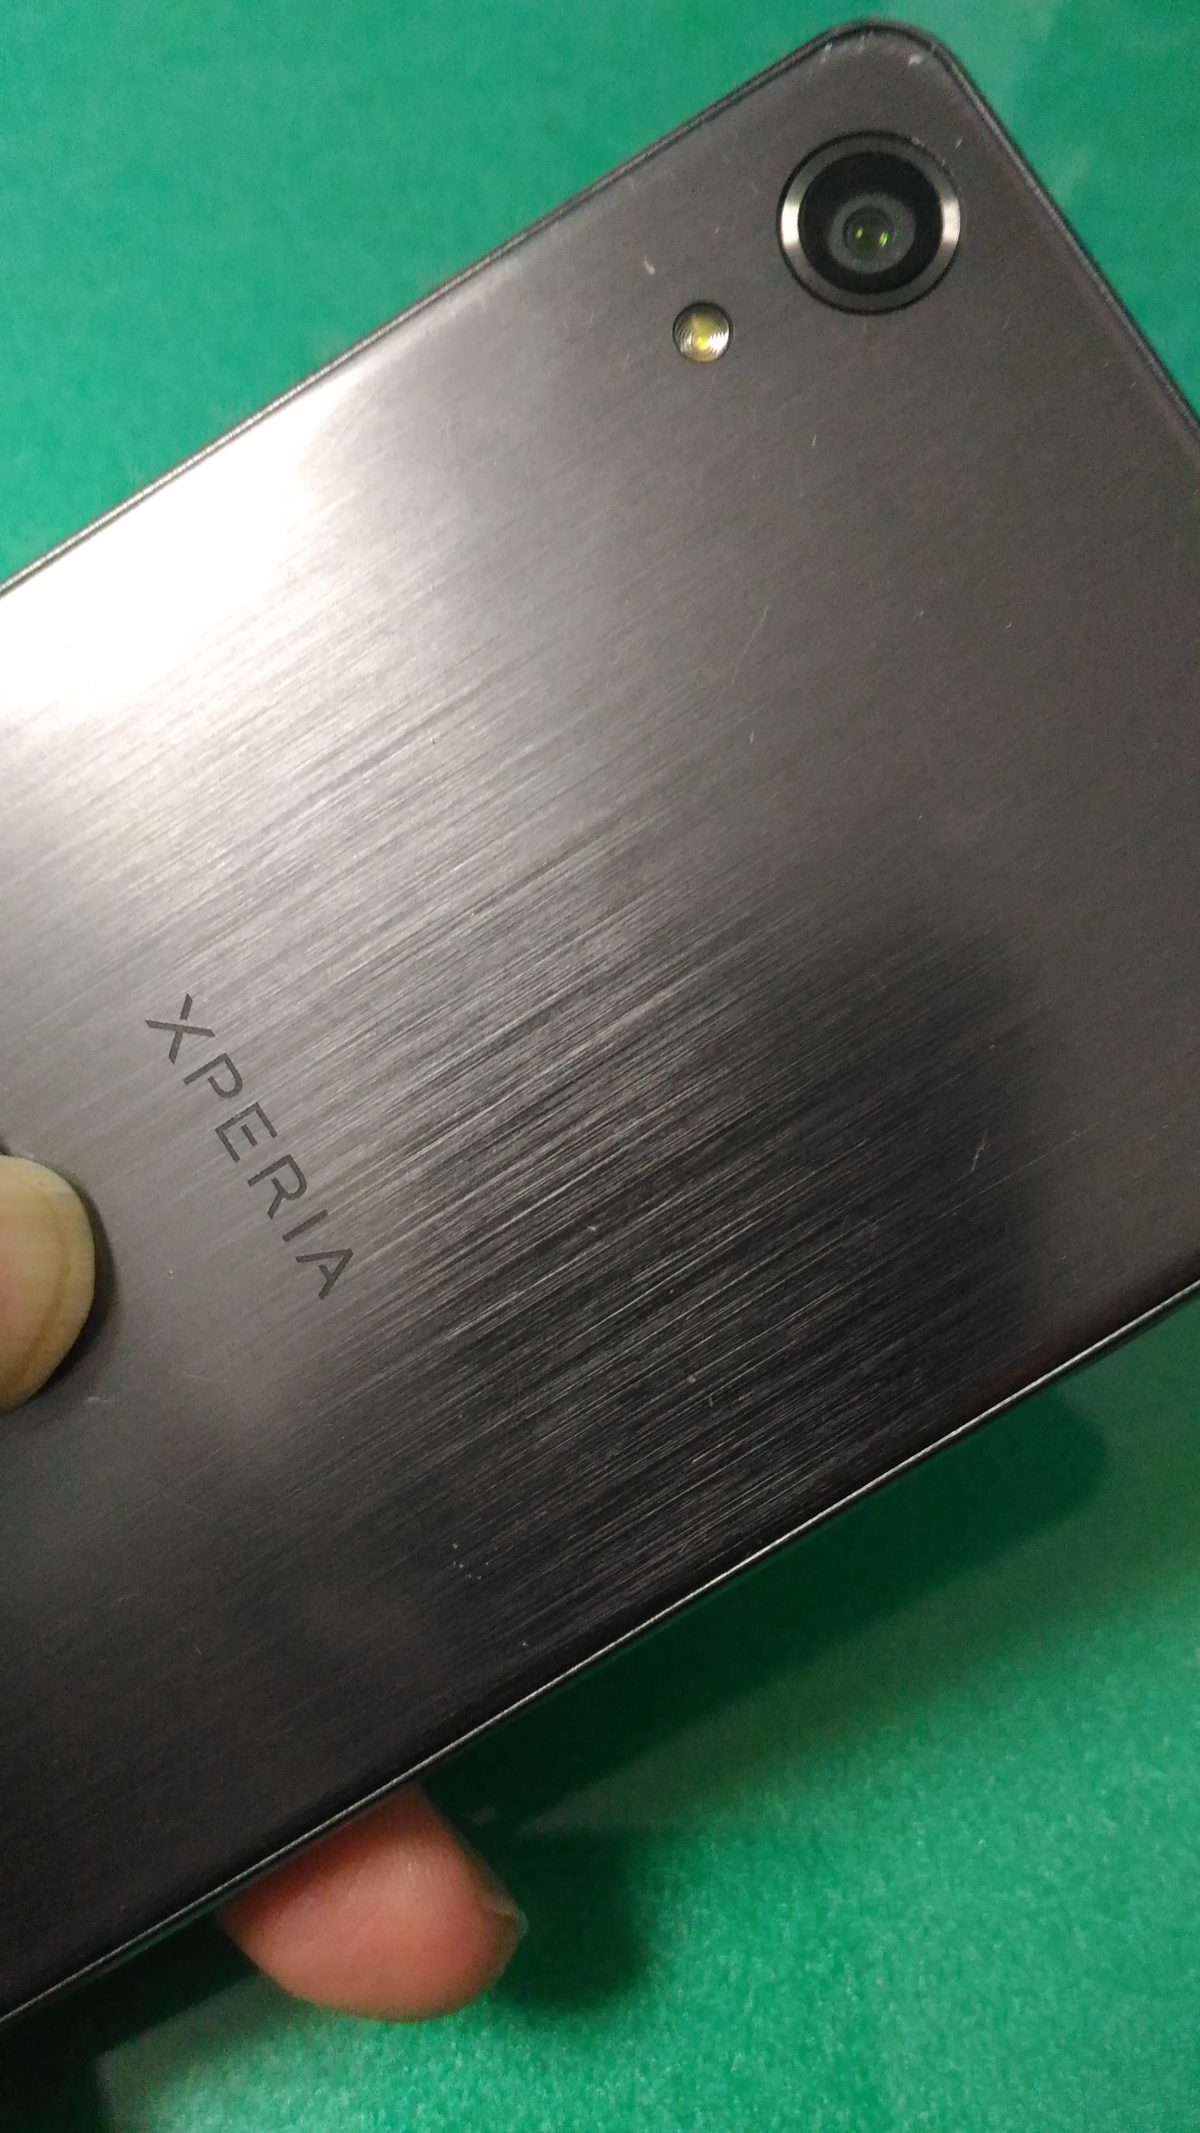 Sony Xperia Xperformanceが熱い バッテリー消耗早い 重い 動作が Softbank使用 でも他も同じと思う ページ 4 Travel Central Japan Nagoya Aichi Gifu Nagano ほかほか